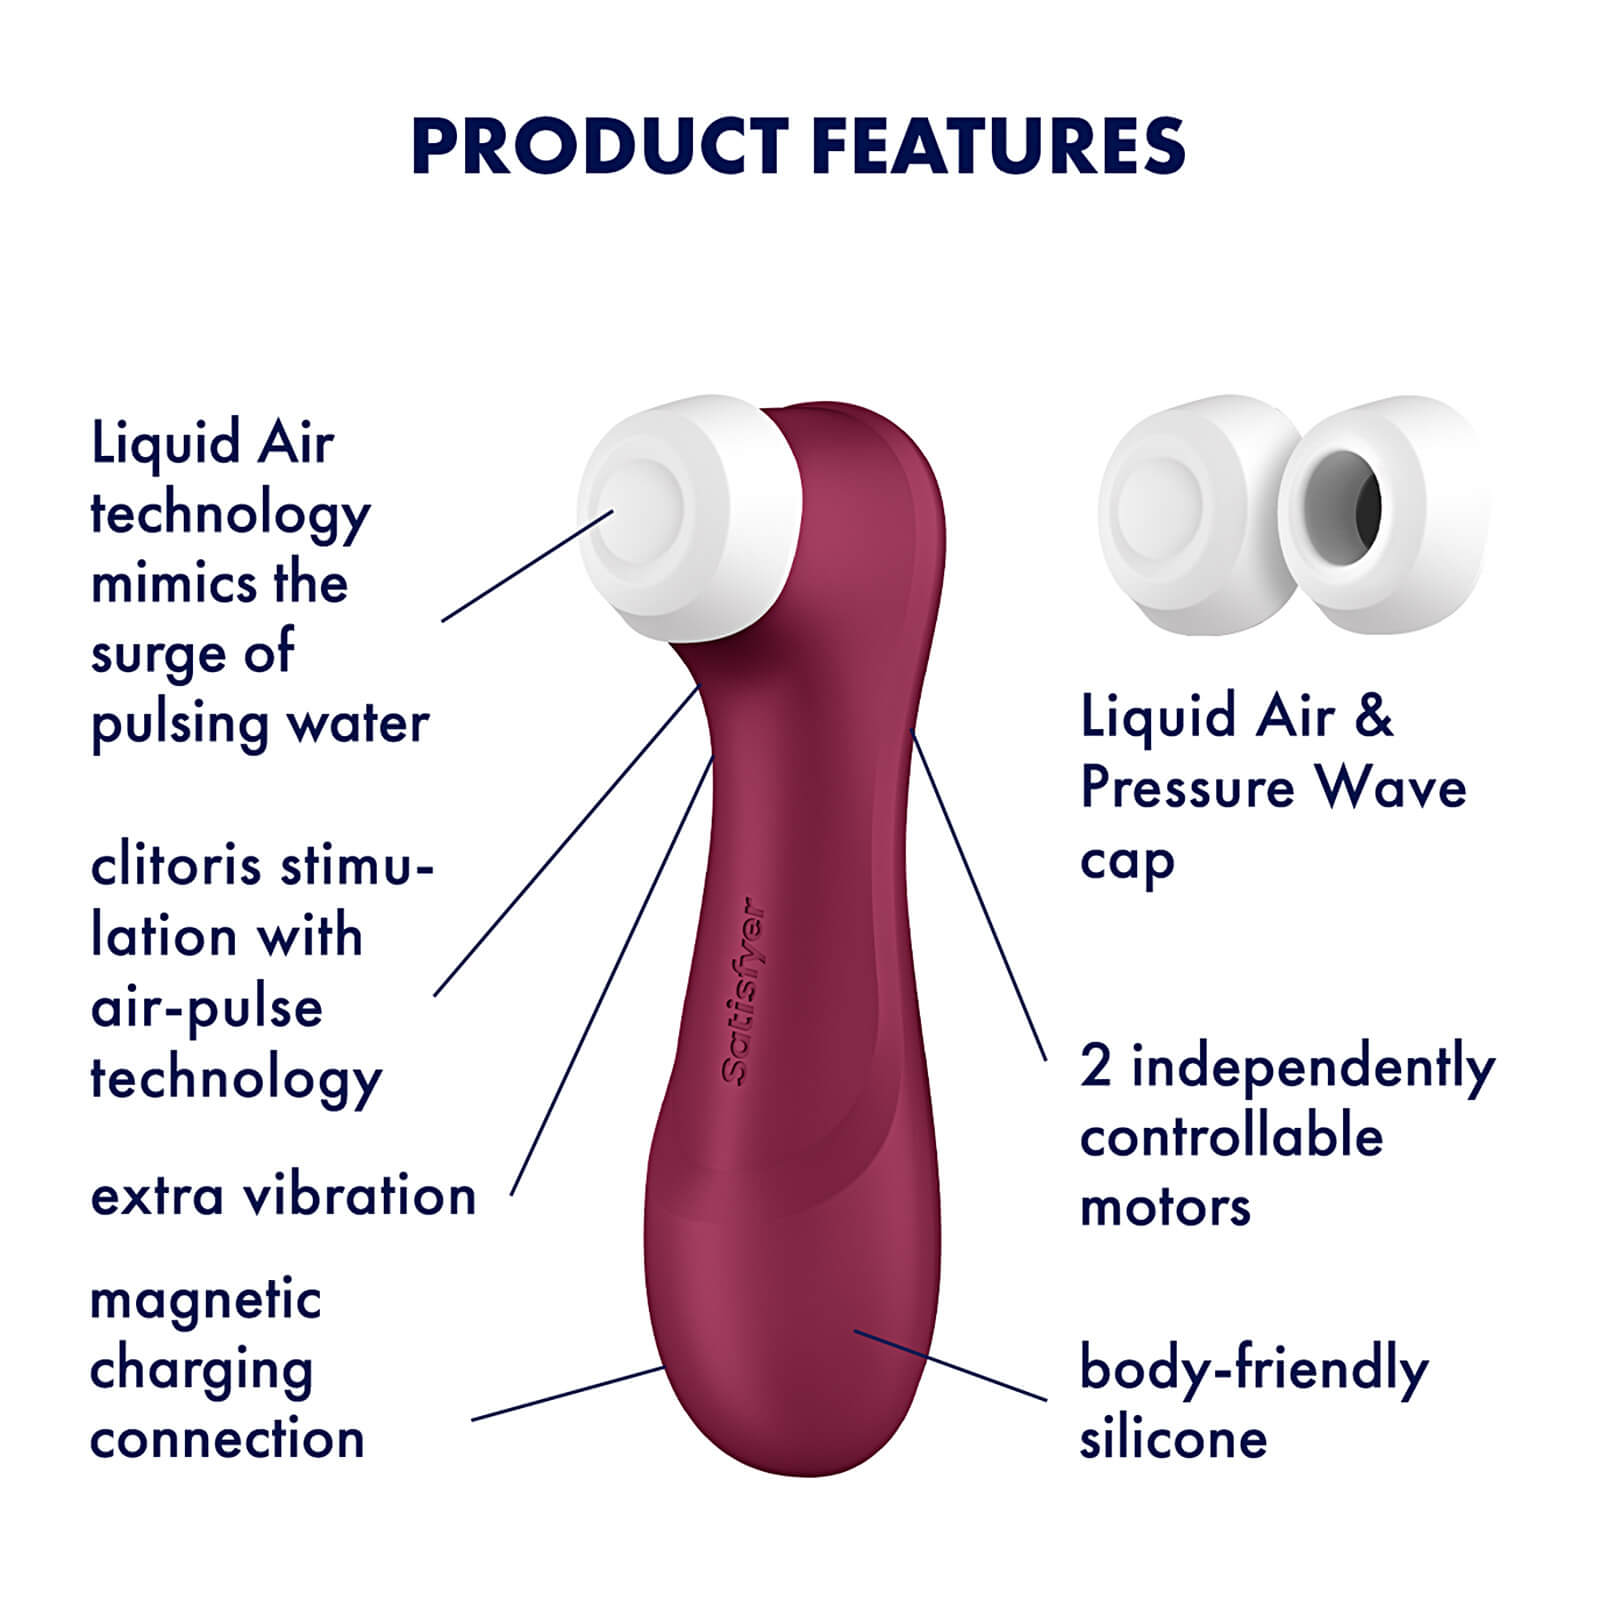 Satisfyer Pro 2 Generation 3 (Lilac), Liquid Air vibrátor